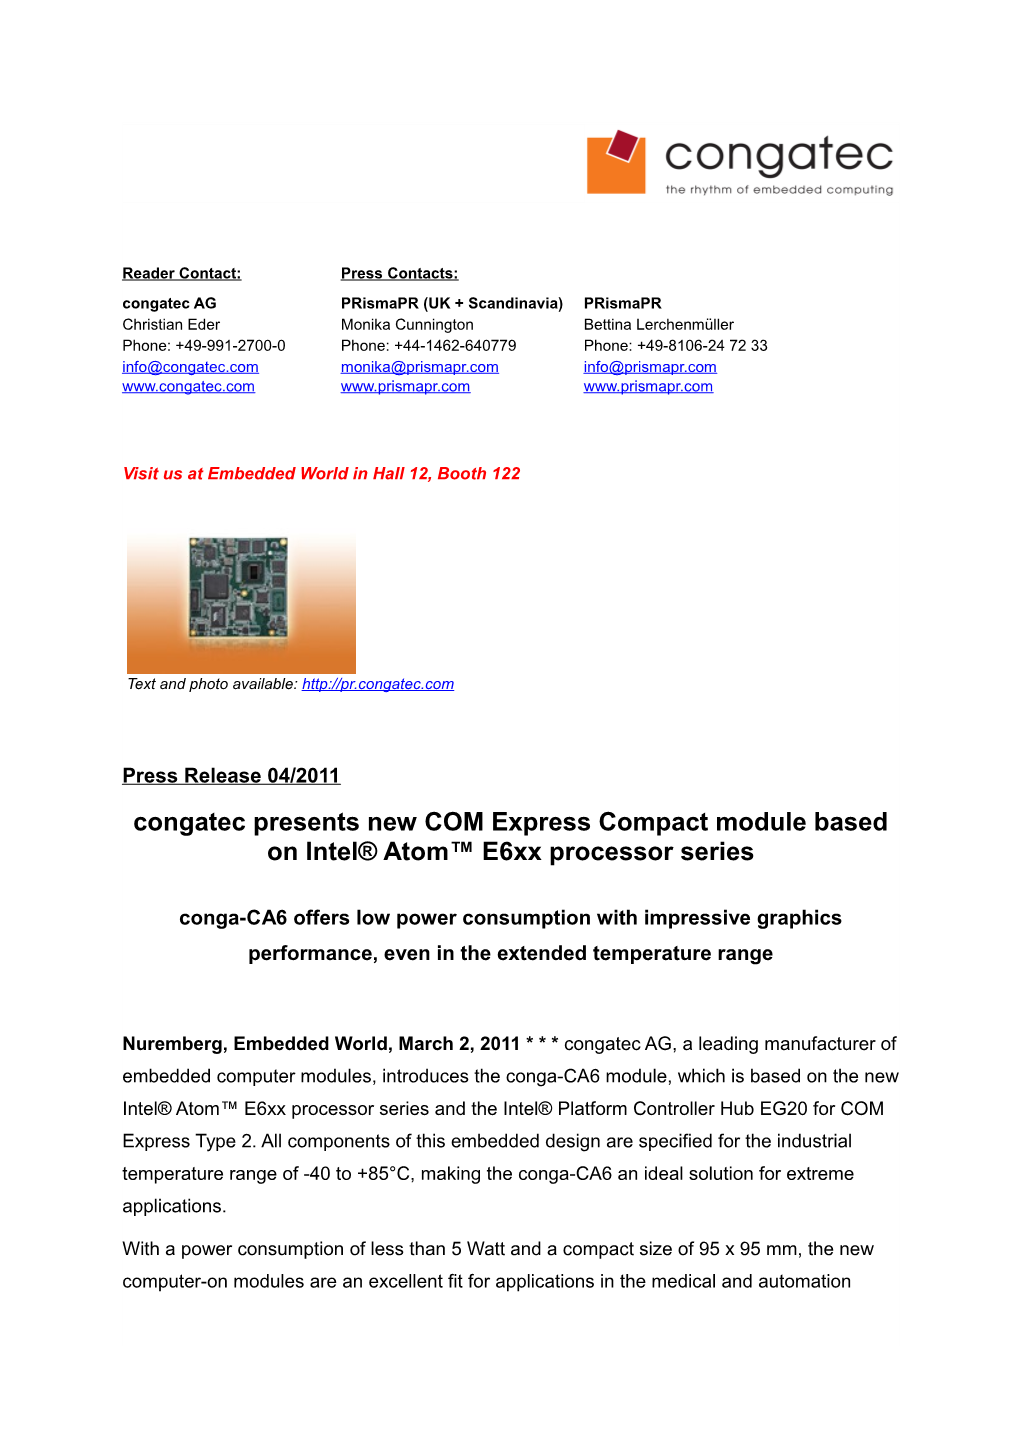 Congatec Presents New COM Express Compact Module Based on Intel Atom E6xx Processor Series